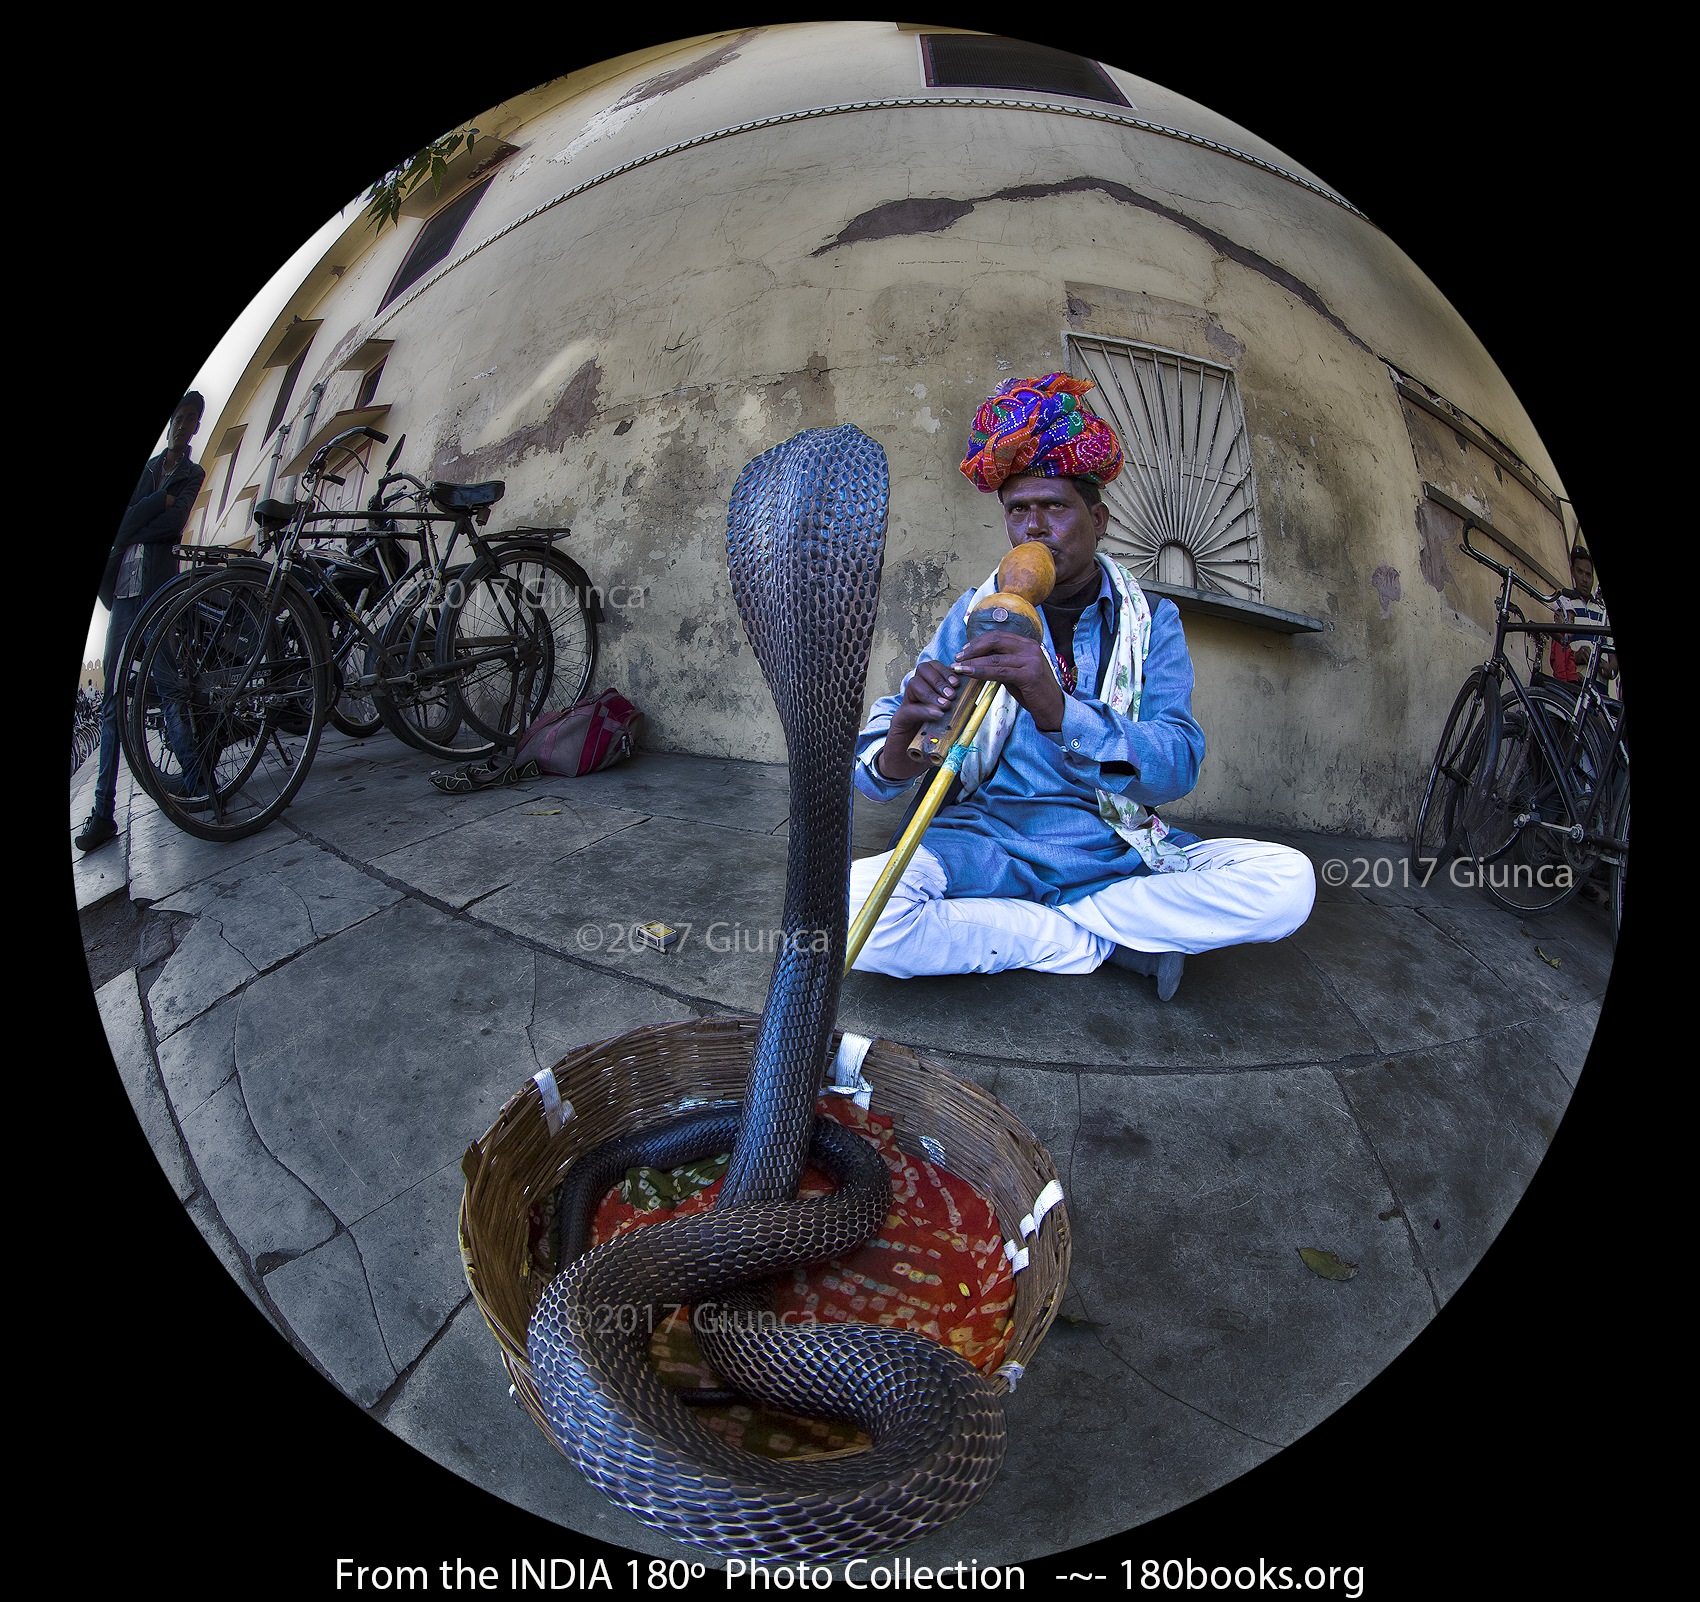 Imag of a Snake Charmer, Rajasthan